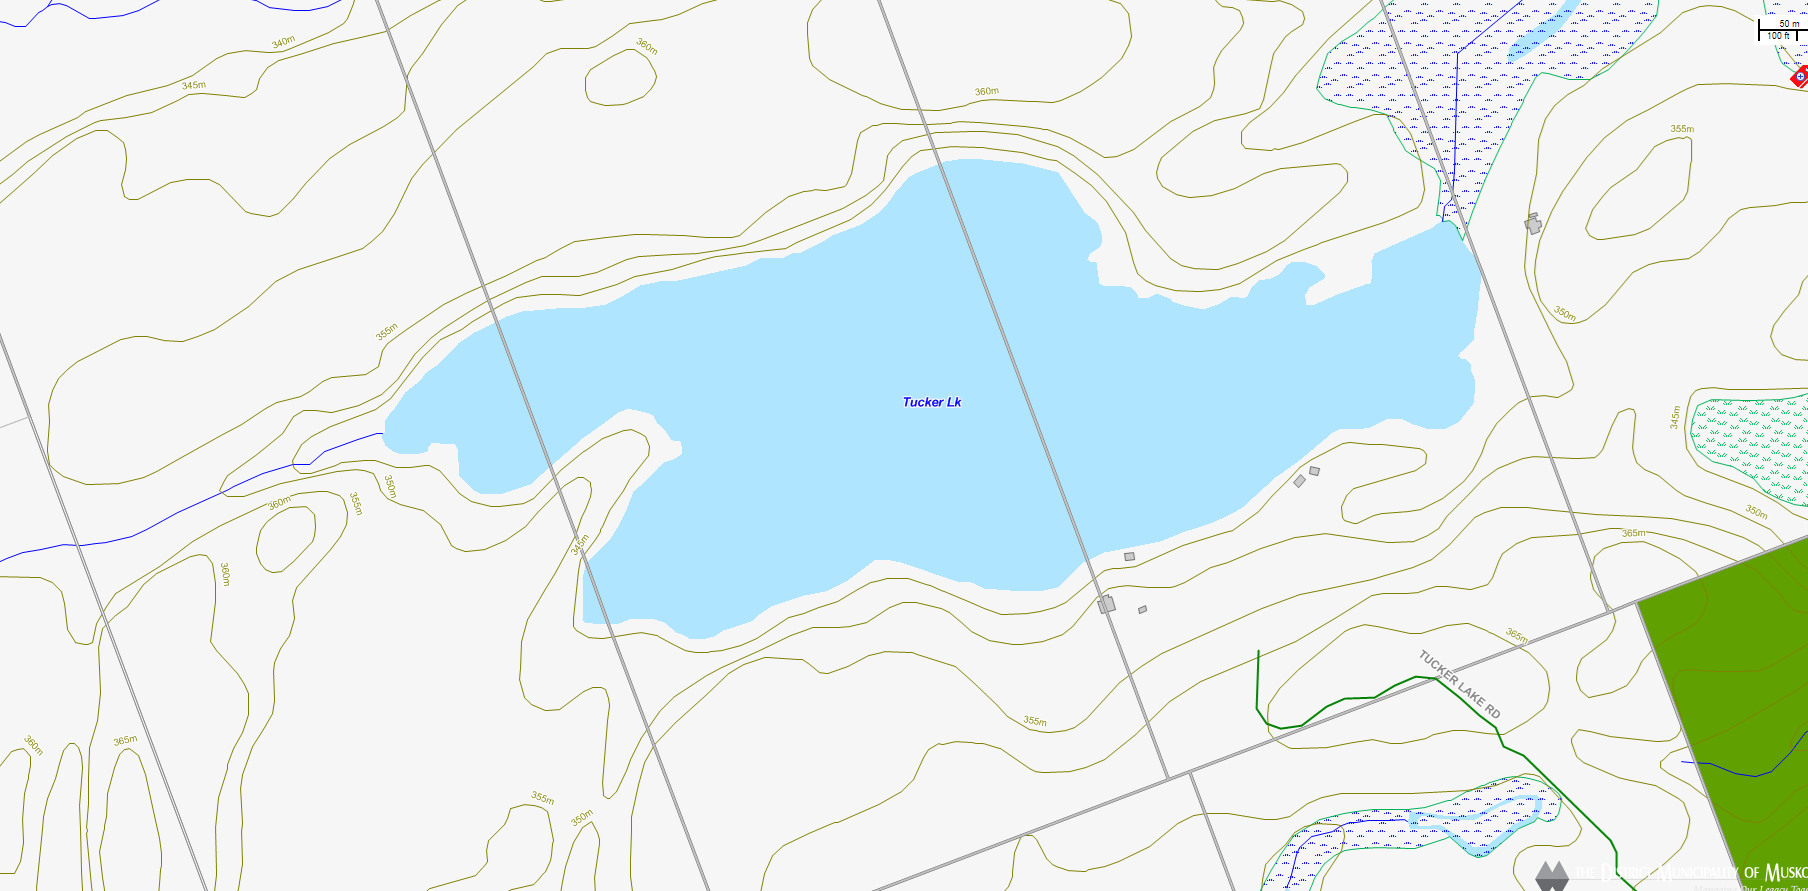 East Buck Lake Cadastral Map - East Buck Lake - Muskoka